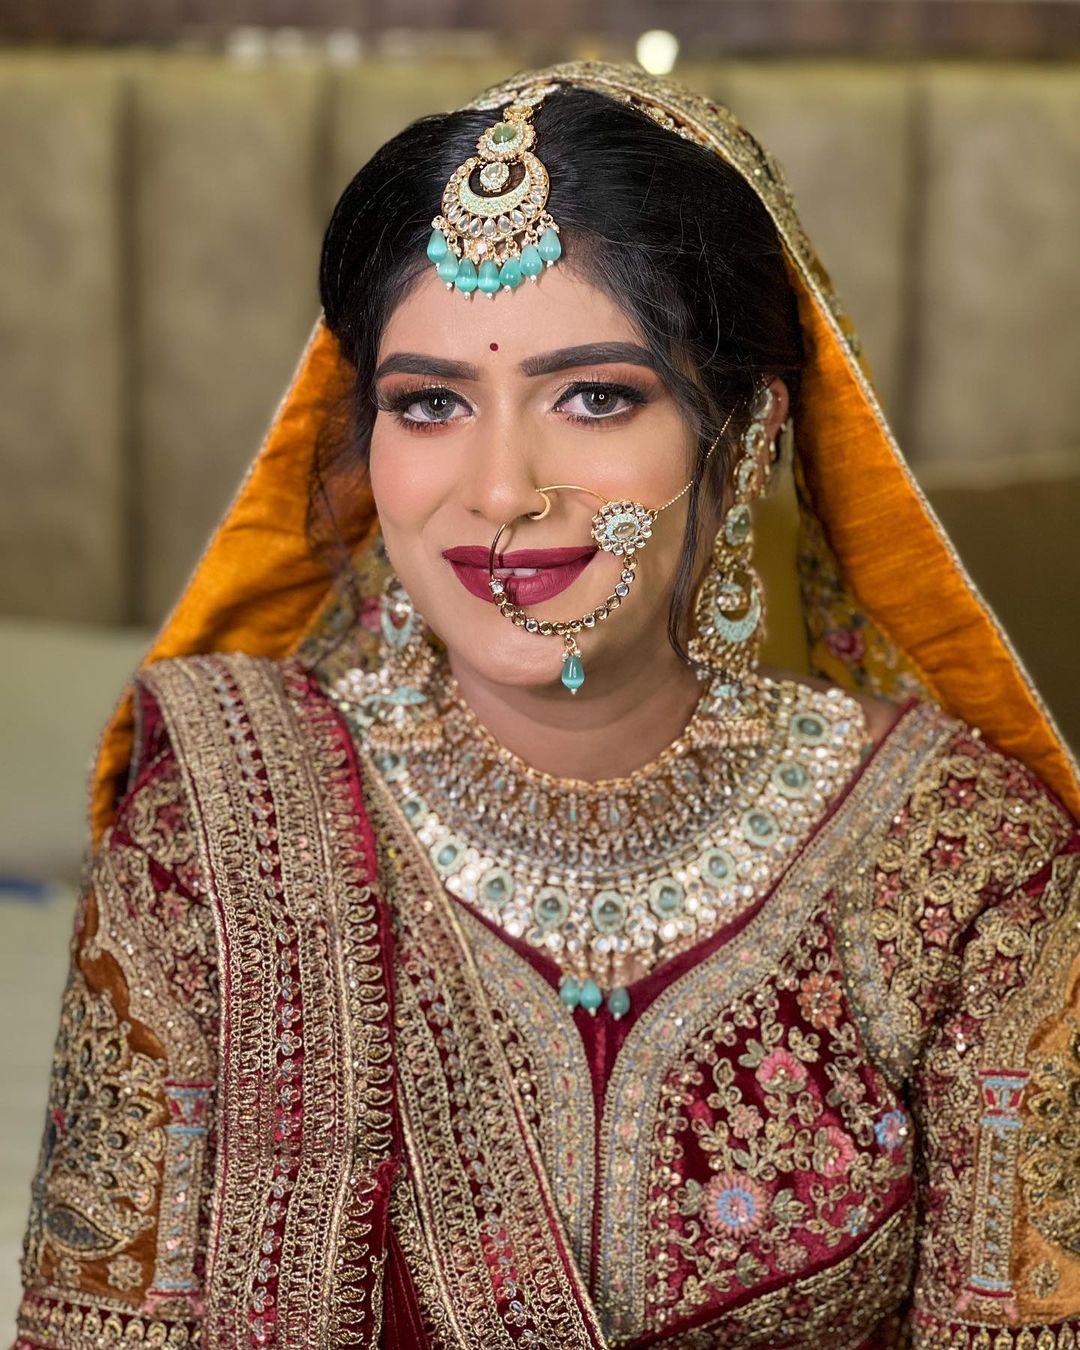 class="content__text"
 B R I D E • R O S H N I🤍✨

Makeup : @priyanshisonimua 

 #bride #bridalmakeup #bridalmakeupartist #indianbride #wedding #indianwedding #indianweddings #trending #minimalmakeup #naturalmakeup #dewymakeup #photo #photooftheday #bridalmakeuplook #trendingbrides #foryou #explore #explorepage #indianwear 
 